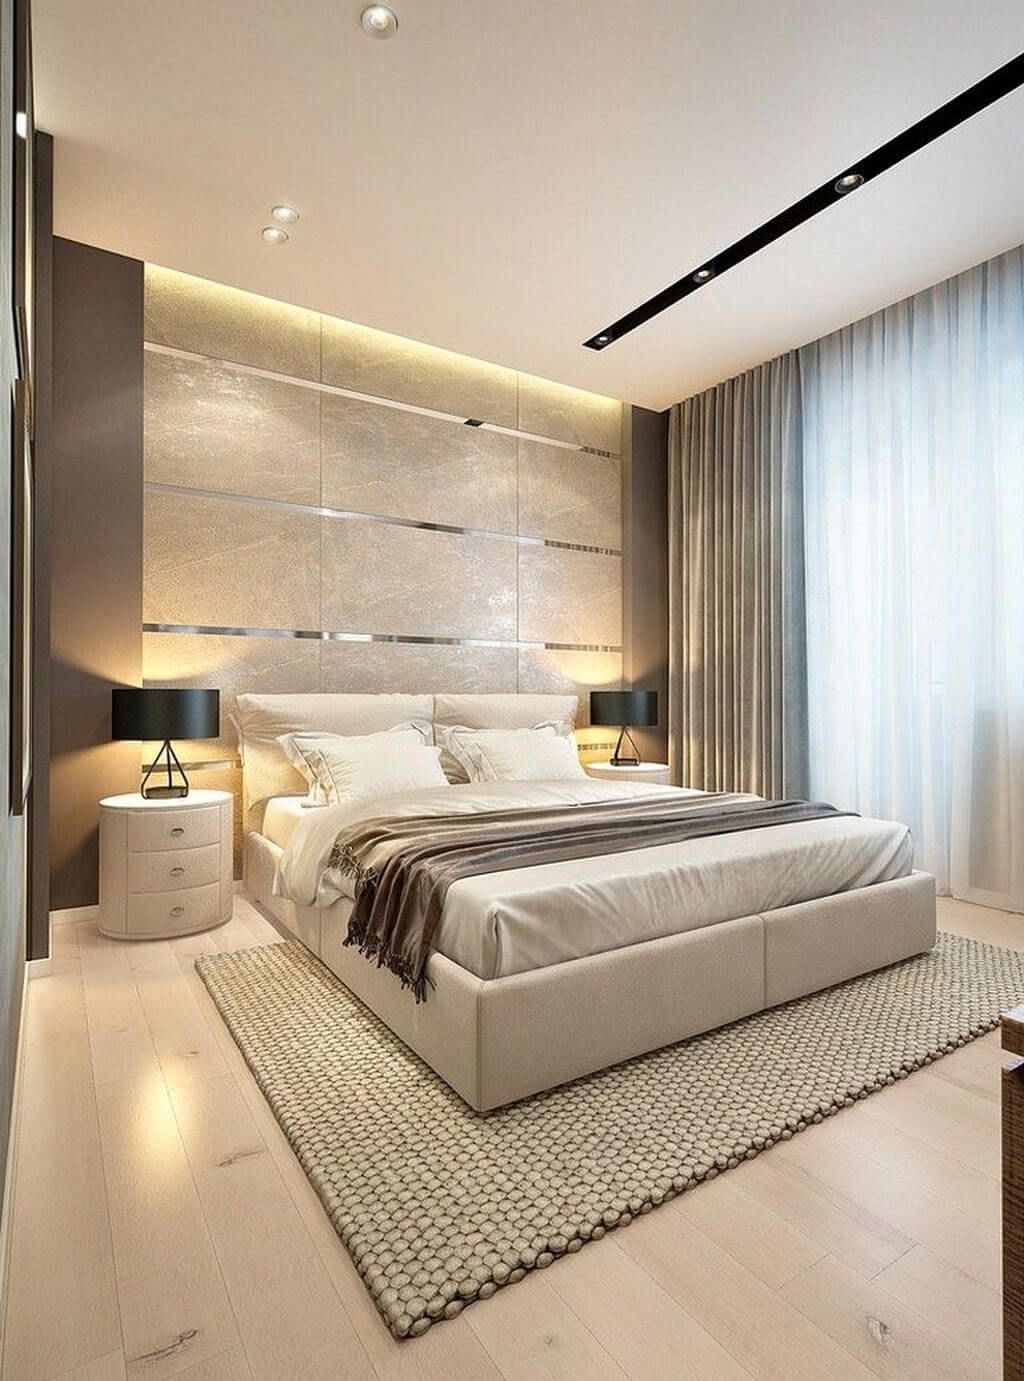 bedroom modern bed interior incredible inspired wooden kitchen